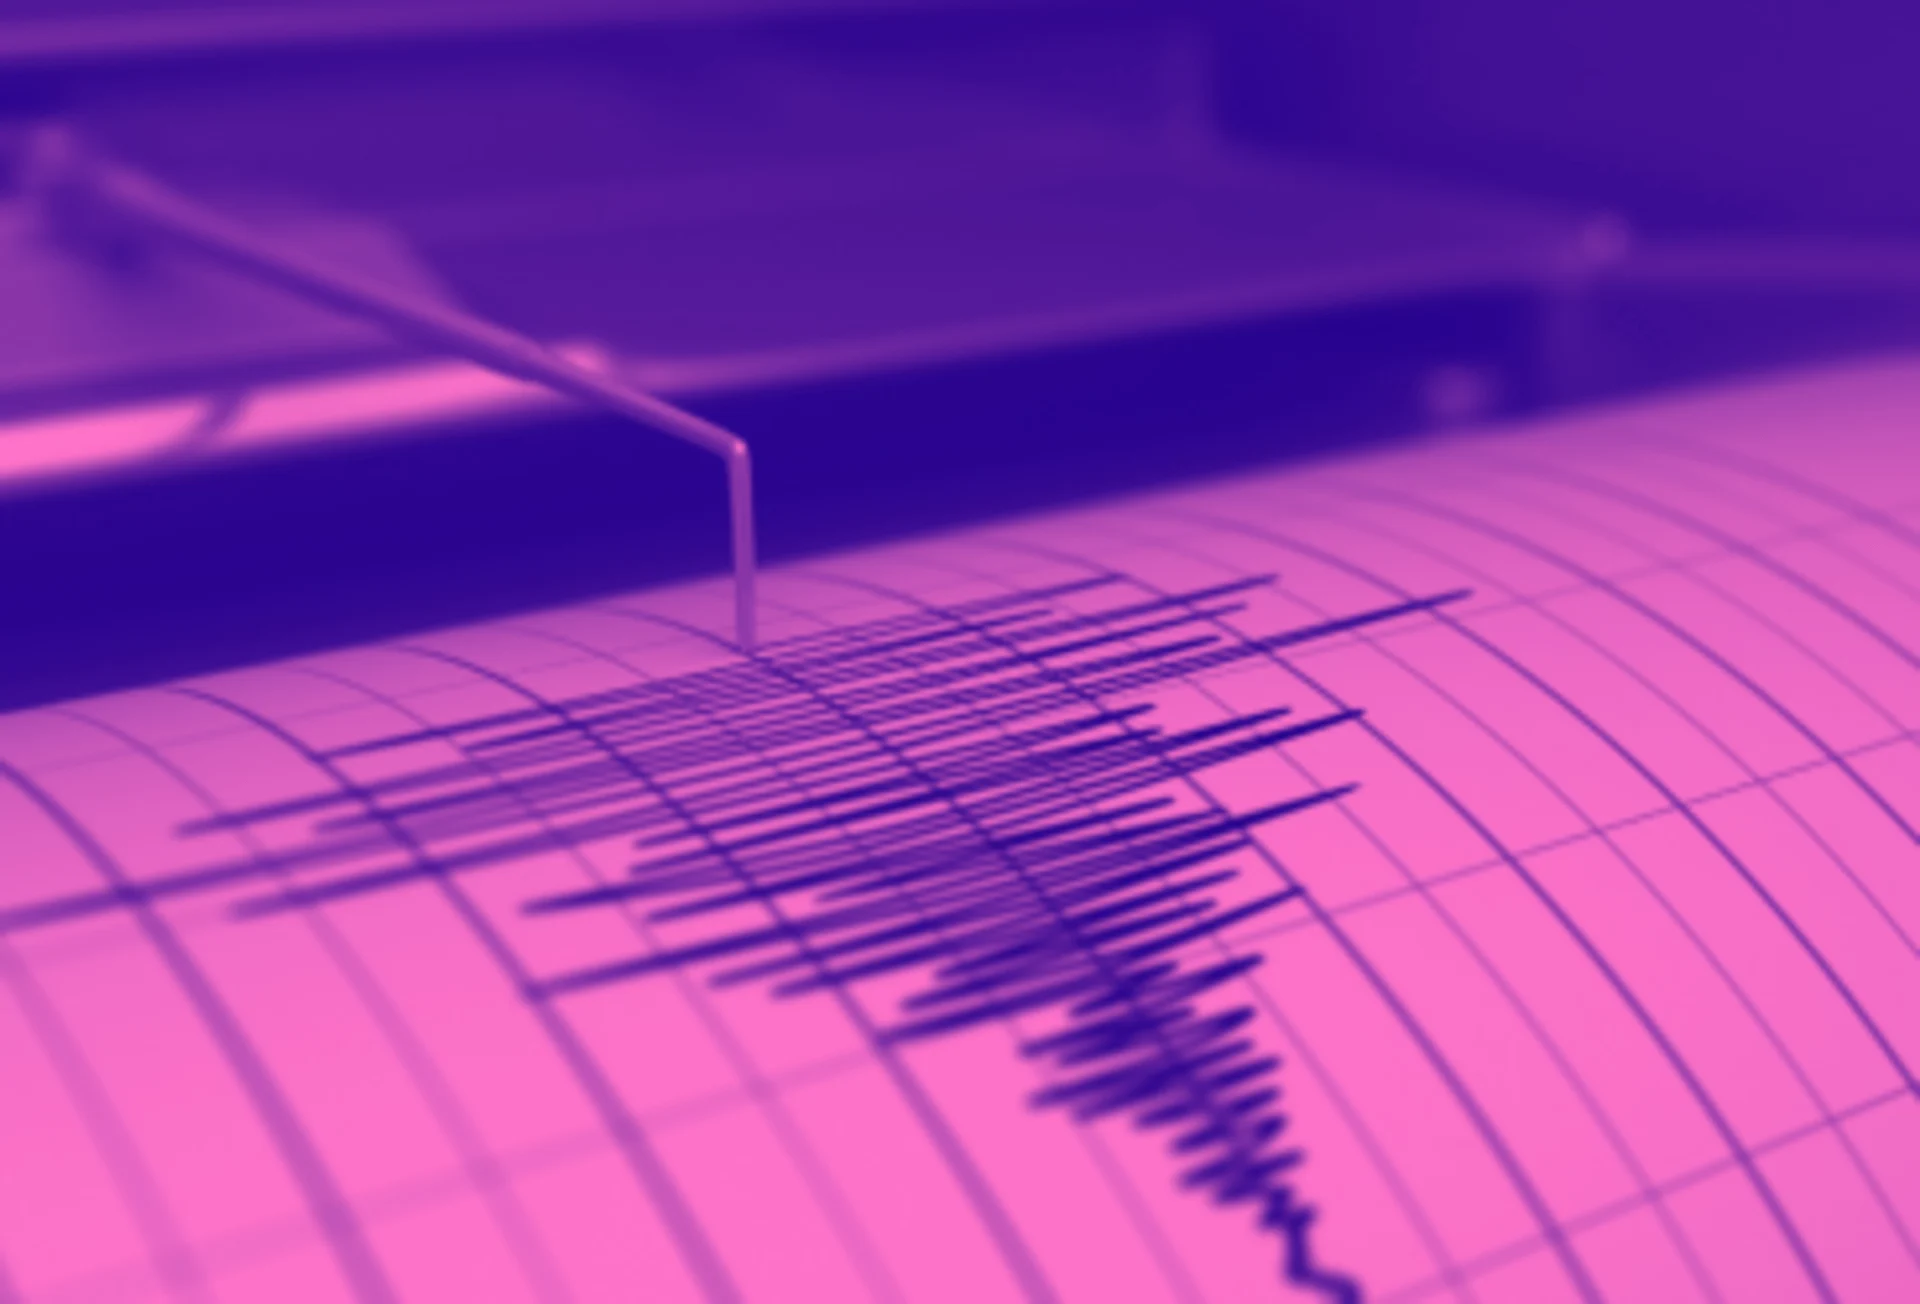 4.9 magnitude earthquake recorded near Port Hardy, B.C., no tsunami threat